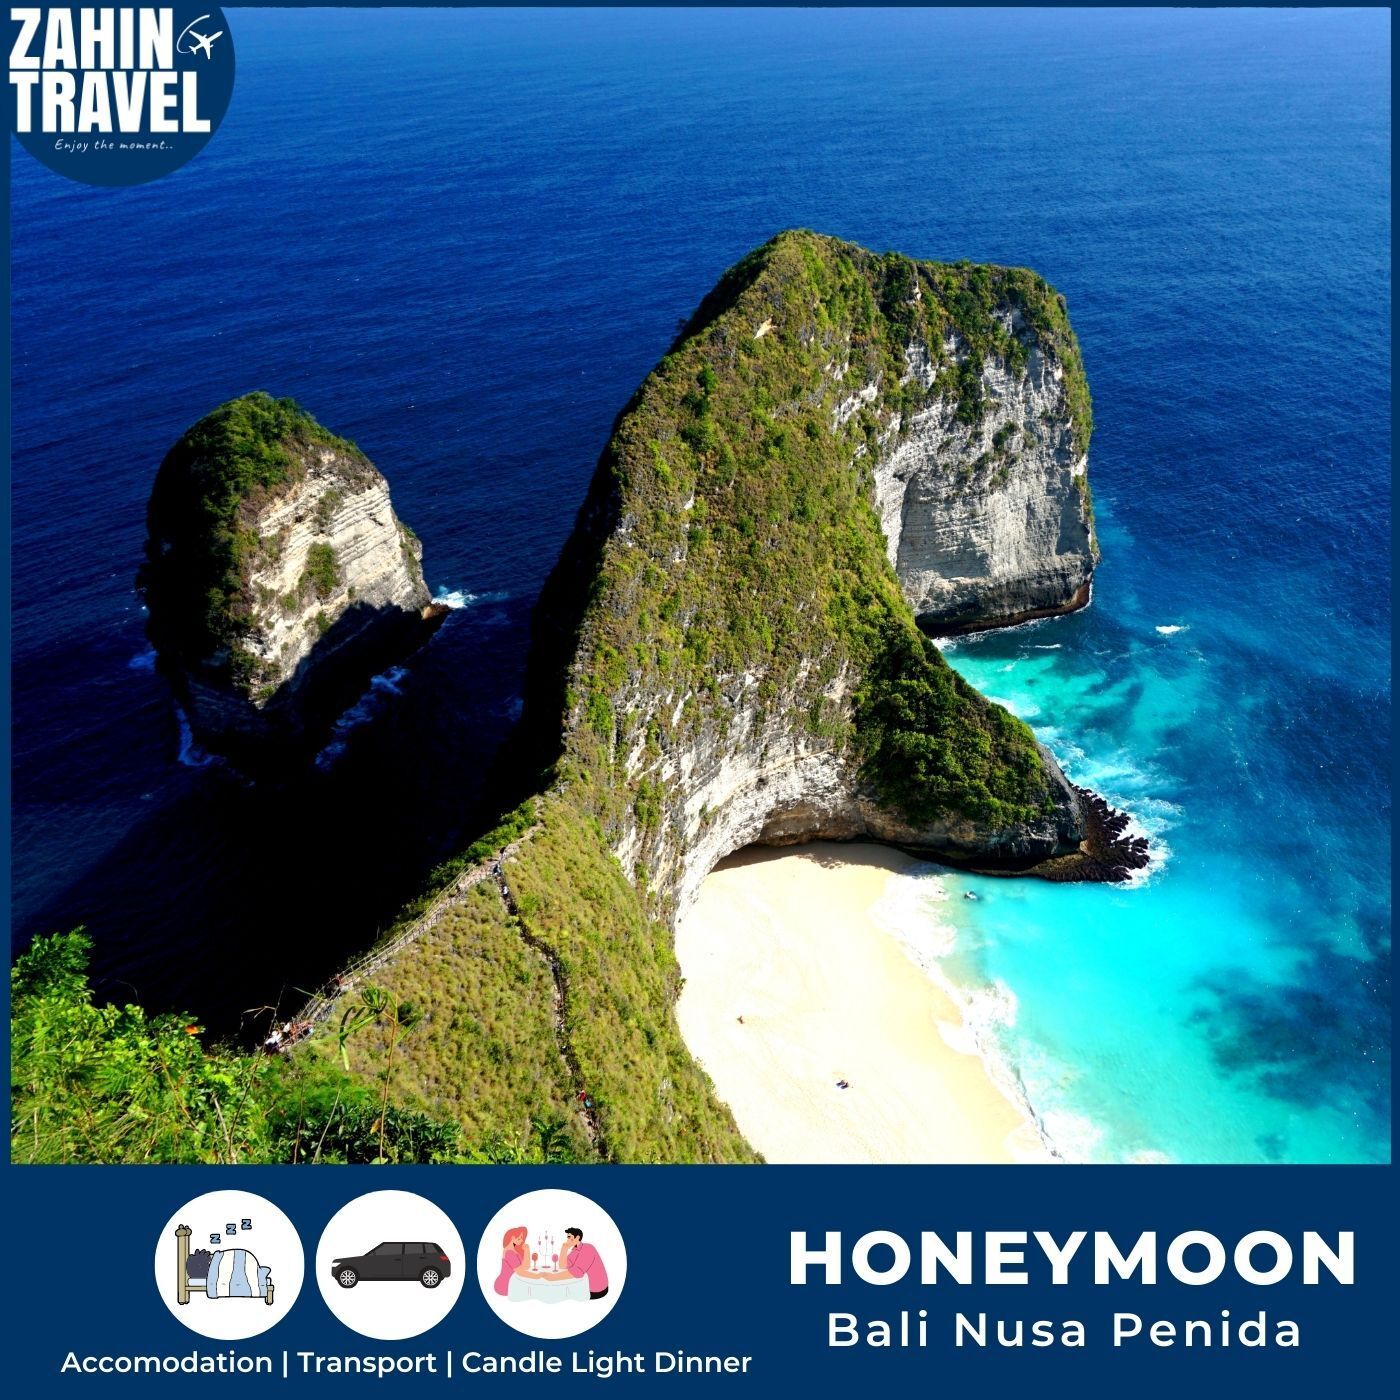 Pakej Honeymoon Bali Nusa Penida 4 Hari 3 Malam